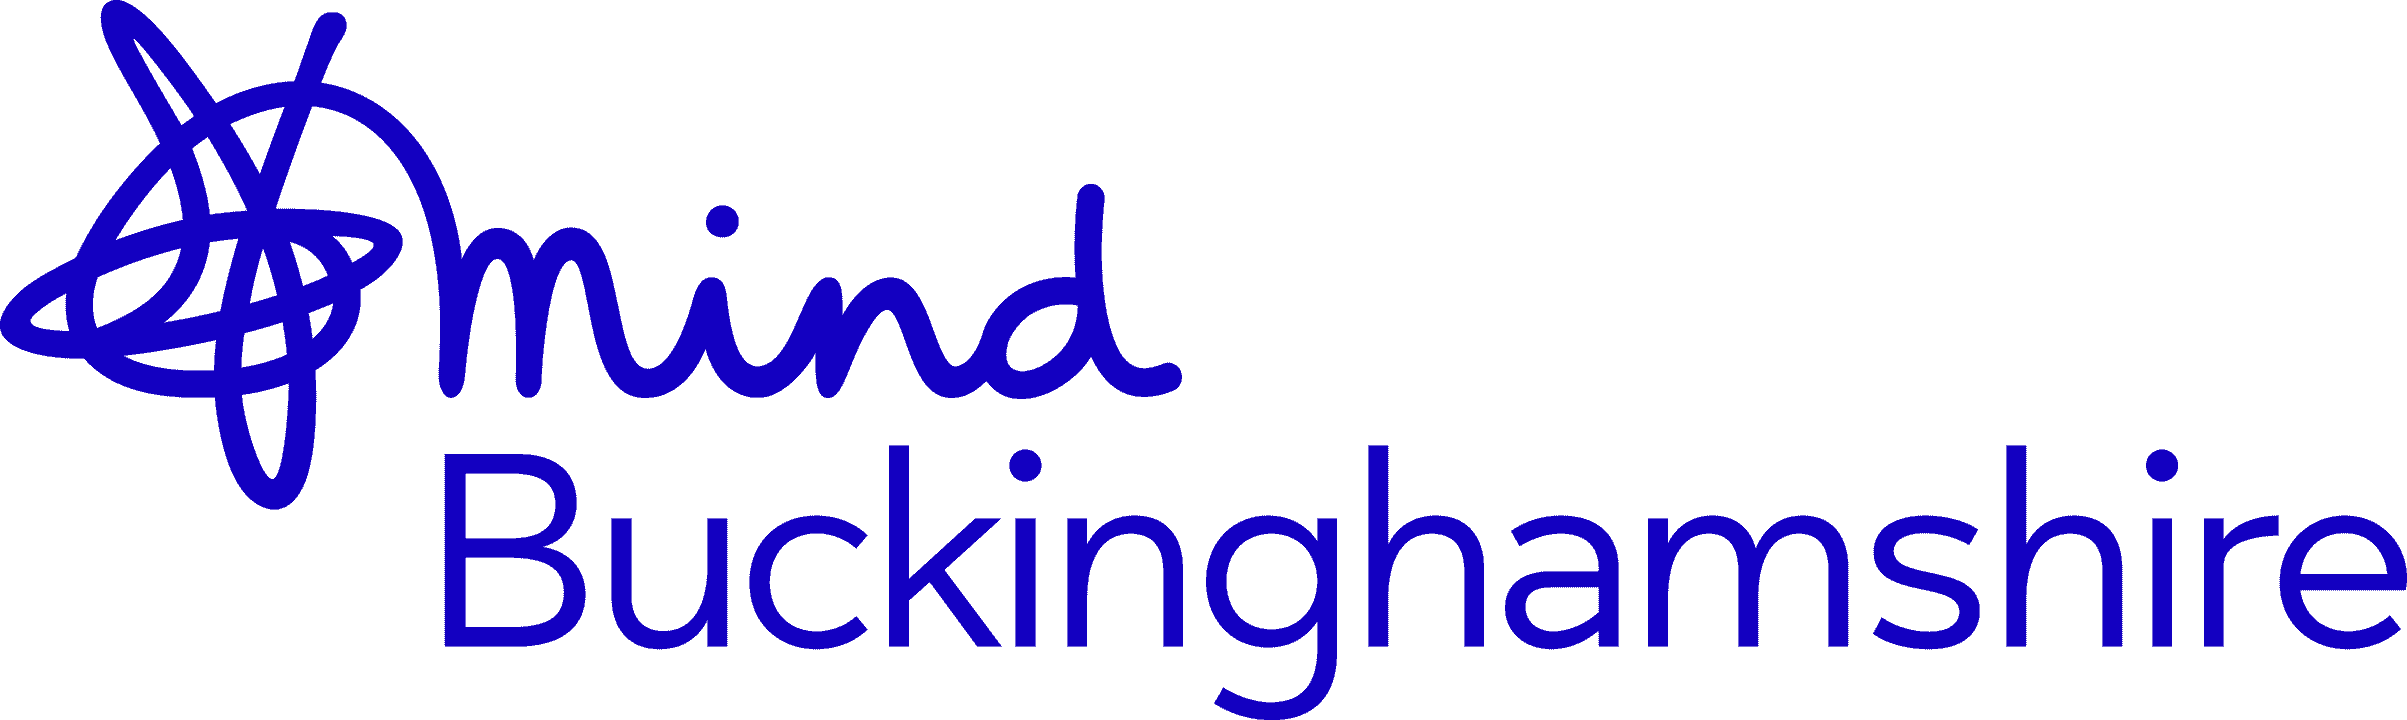 https://ef7reu2nmnd.exactdn.com/wp-content/uploads/2021/09/Buckinghamshire_Mind_Logo_stacked_RGB.png?strip=all&lossy=0&ssl=1